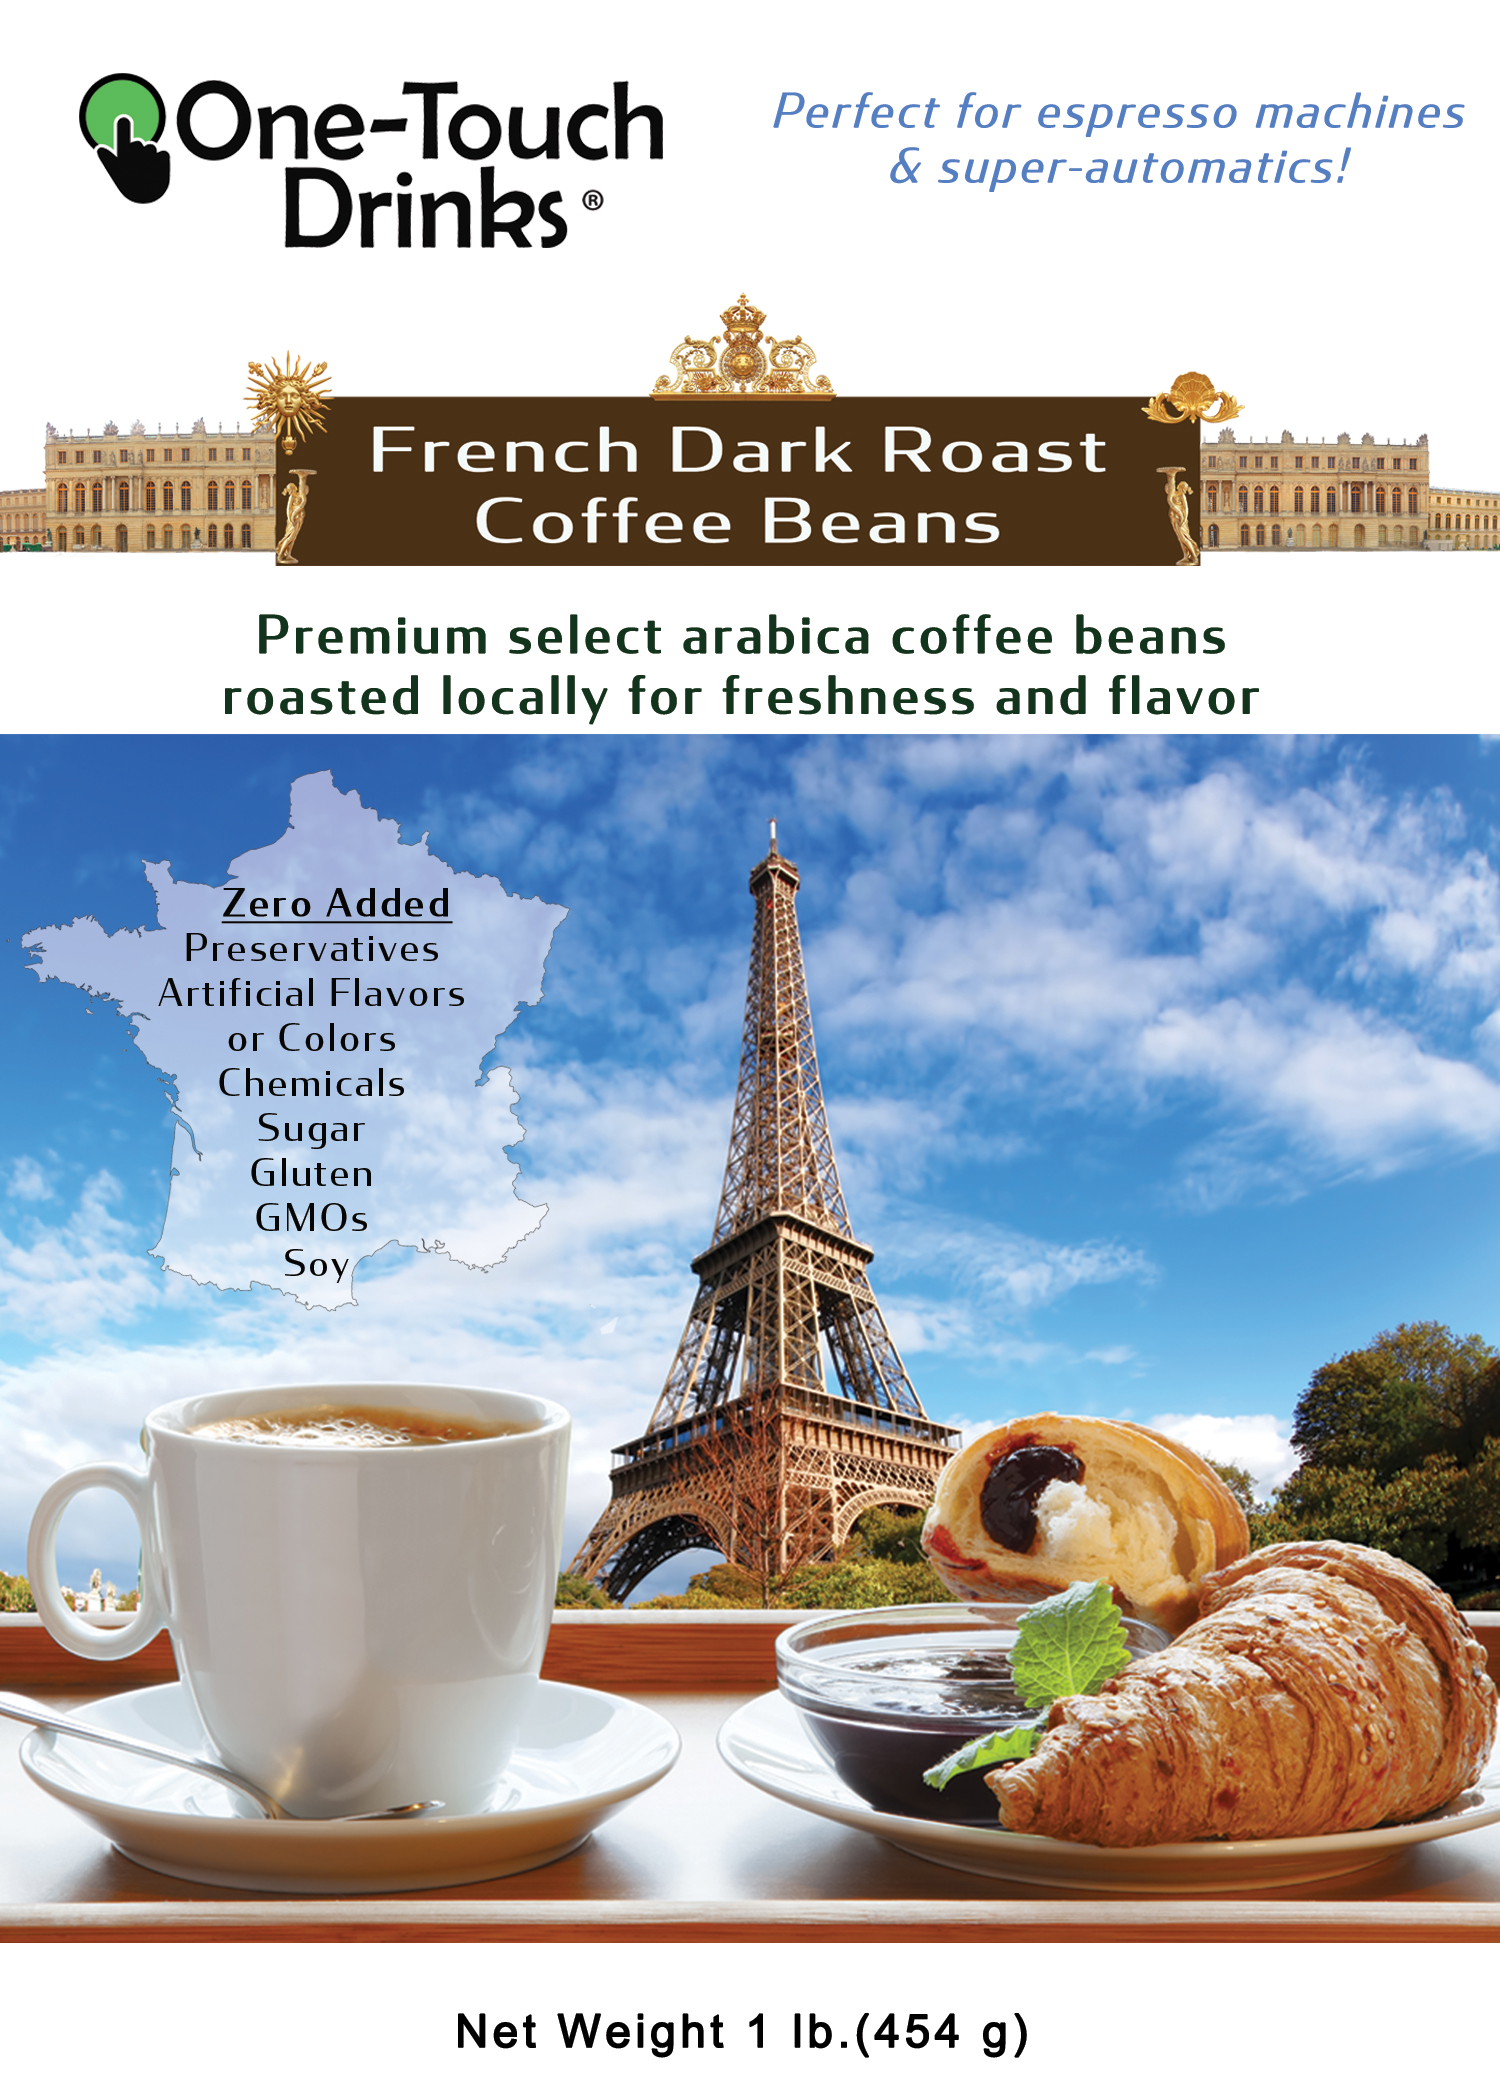 https://onetouchdrinks.com/wp-content/uploads/2019/06/French-Dark-Coffee-Label-1lb.jpg